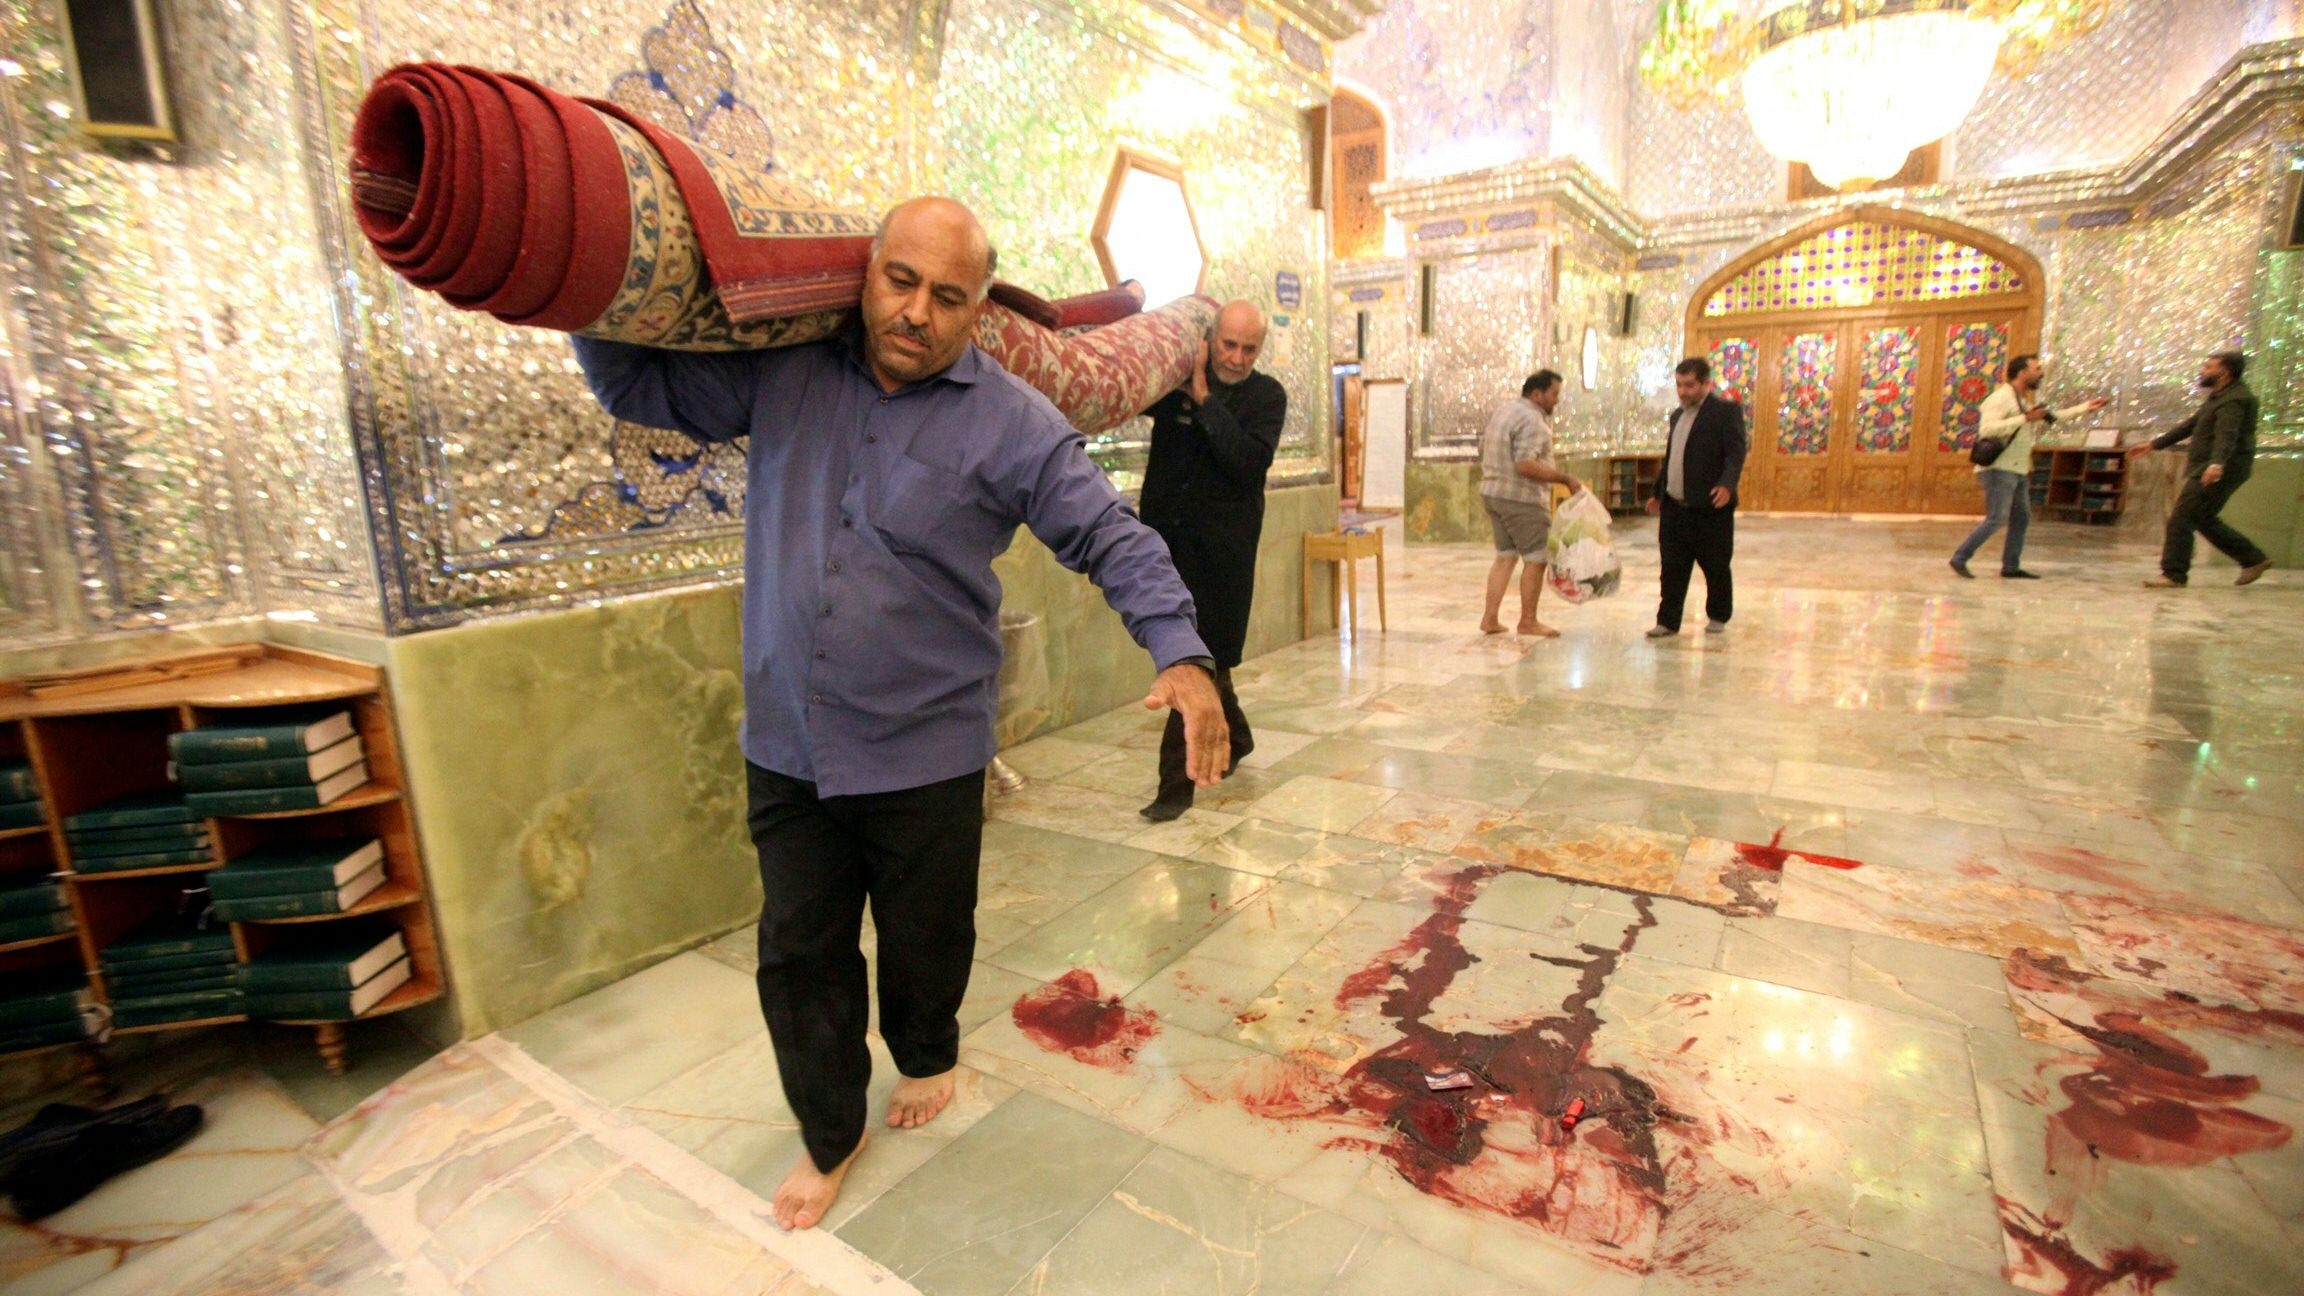 15 Killed, 19 Injured in Terrorist Attack on Shiite Shrine in Iran